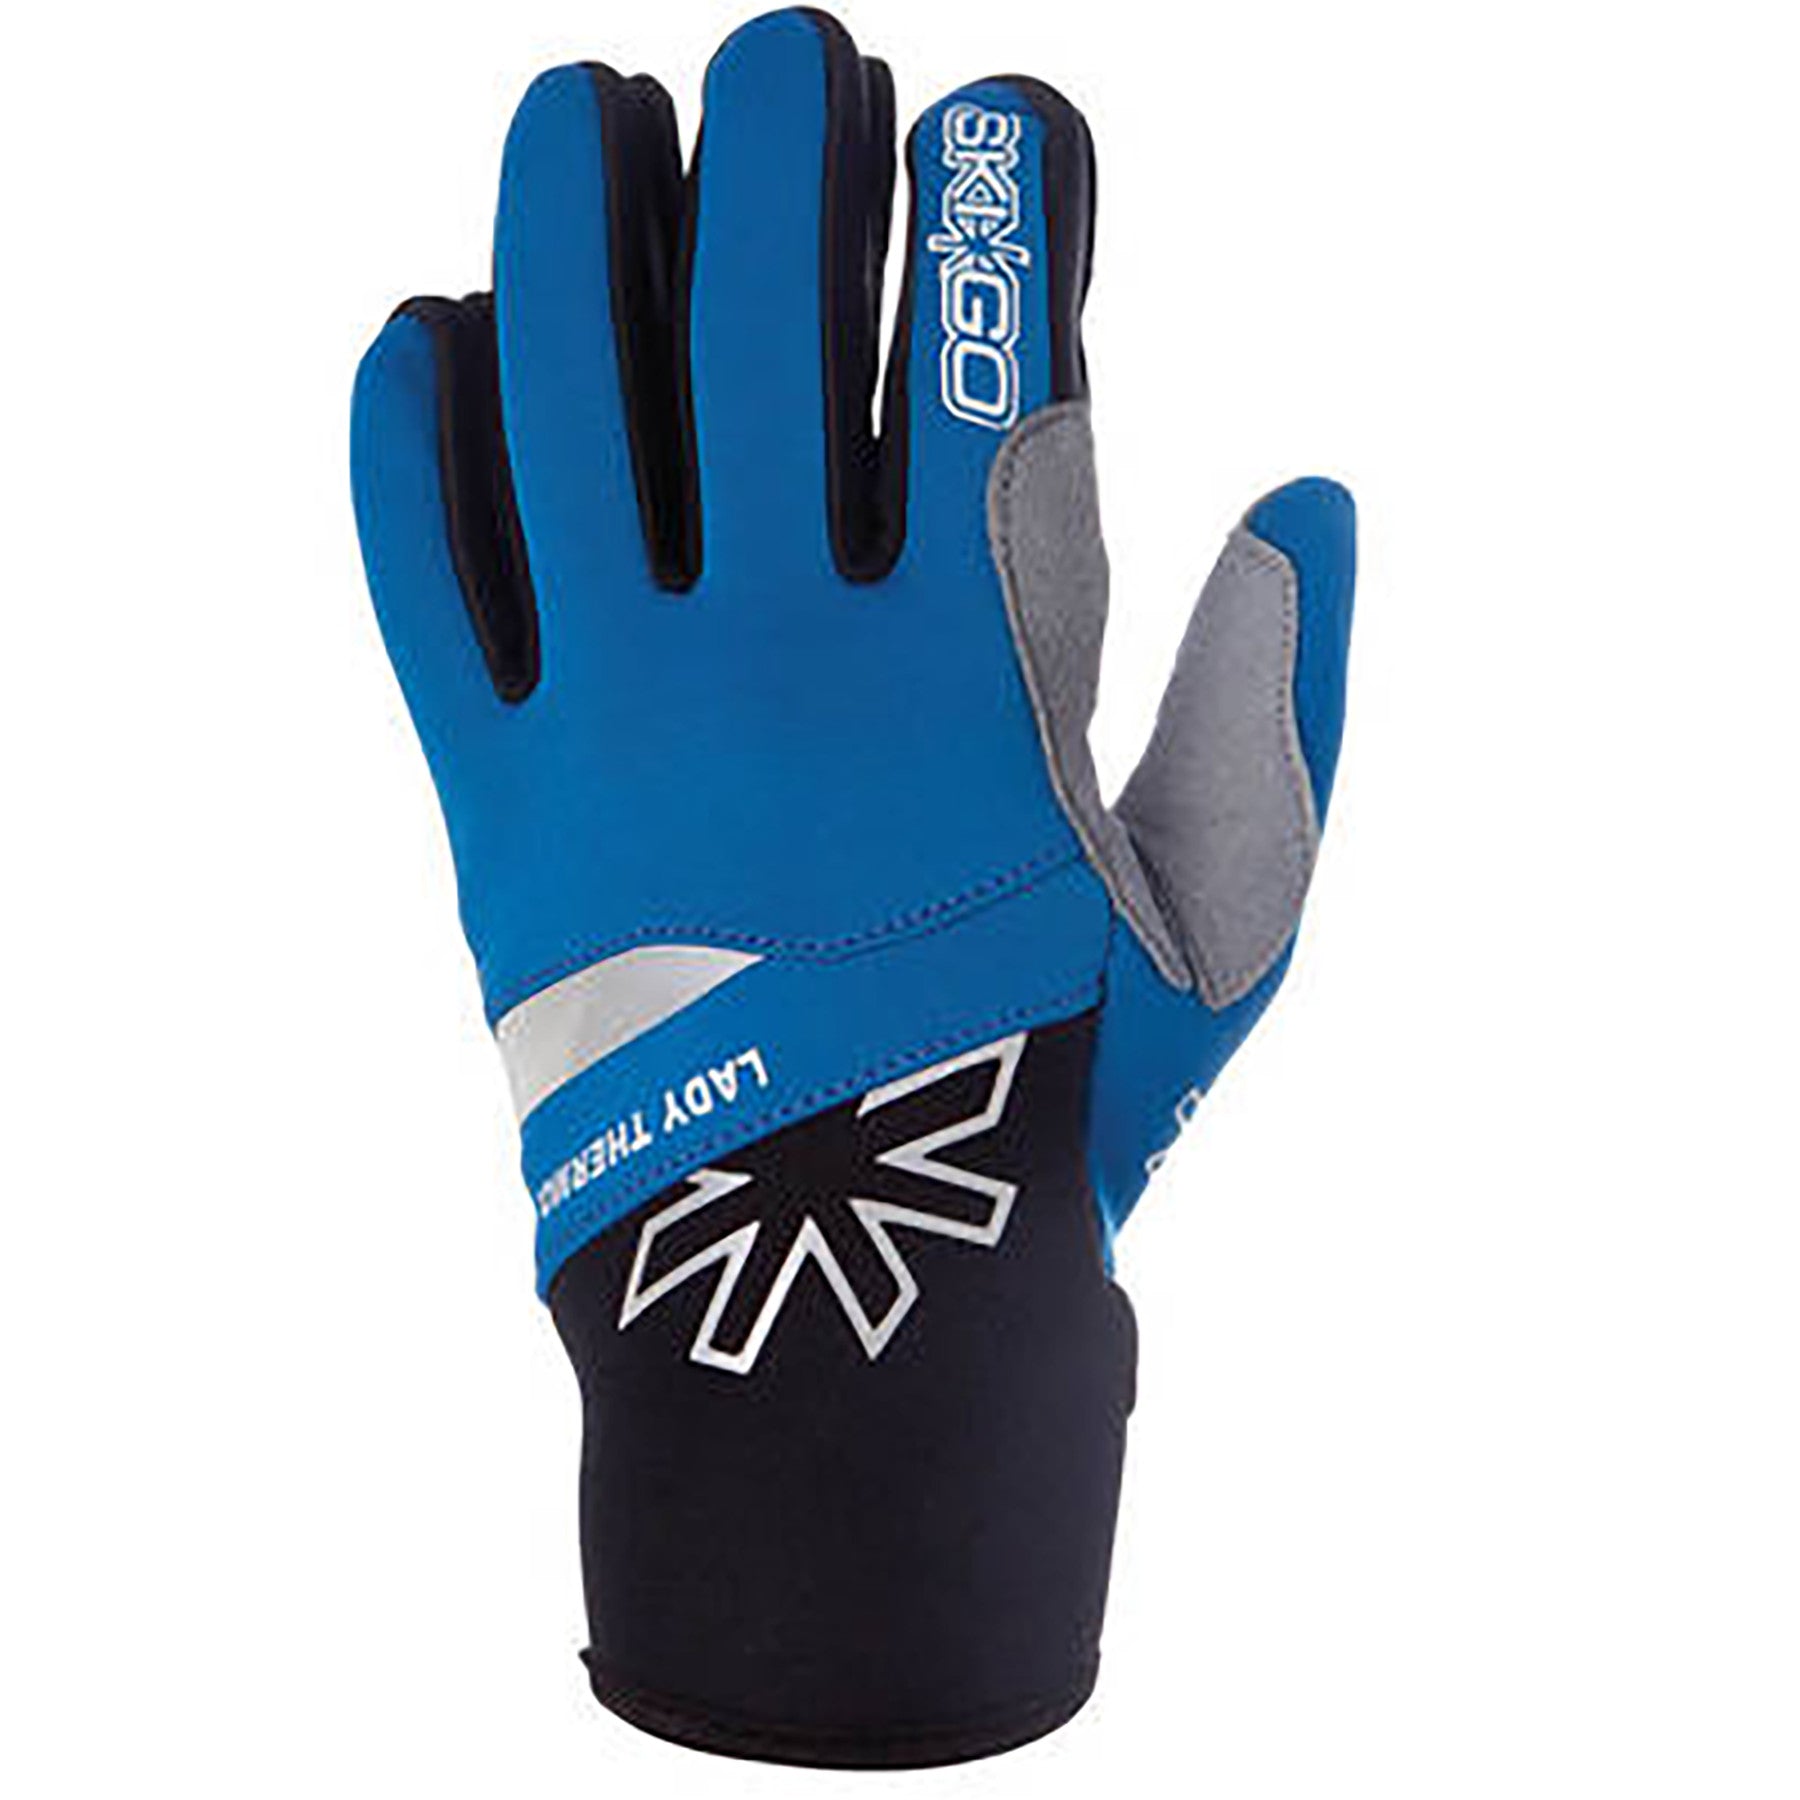 SkiGo Thermo Glove W